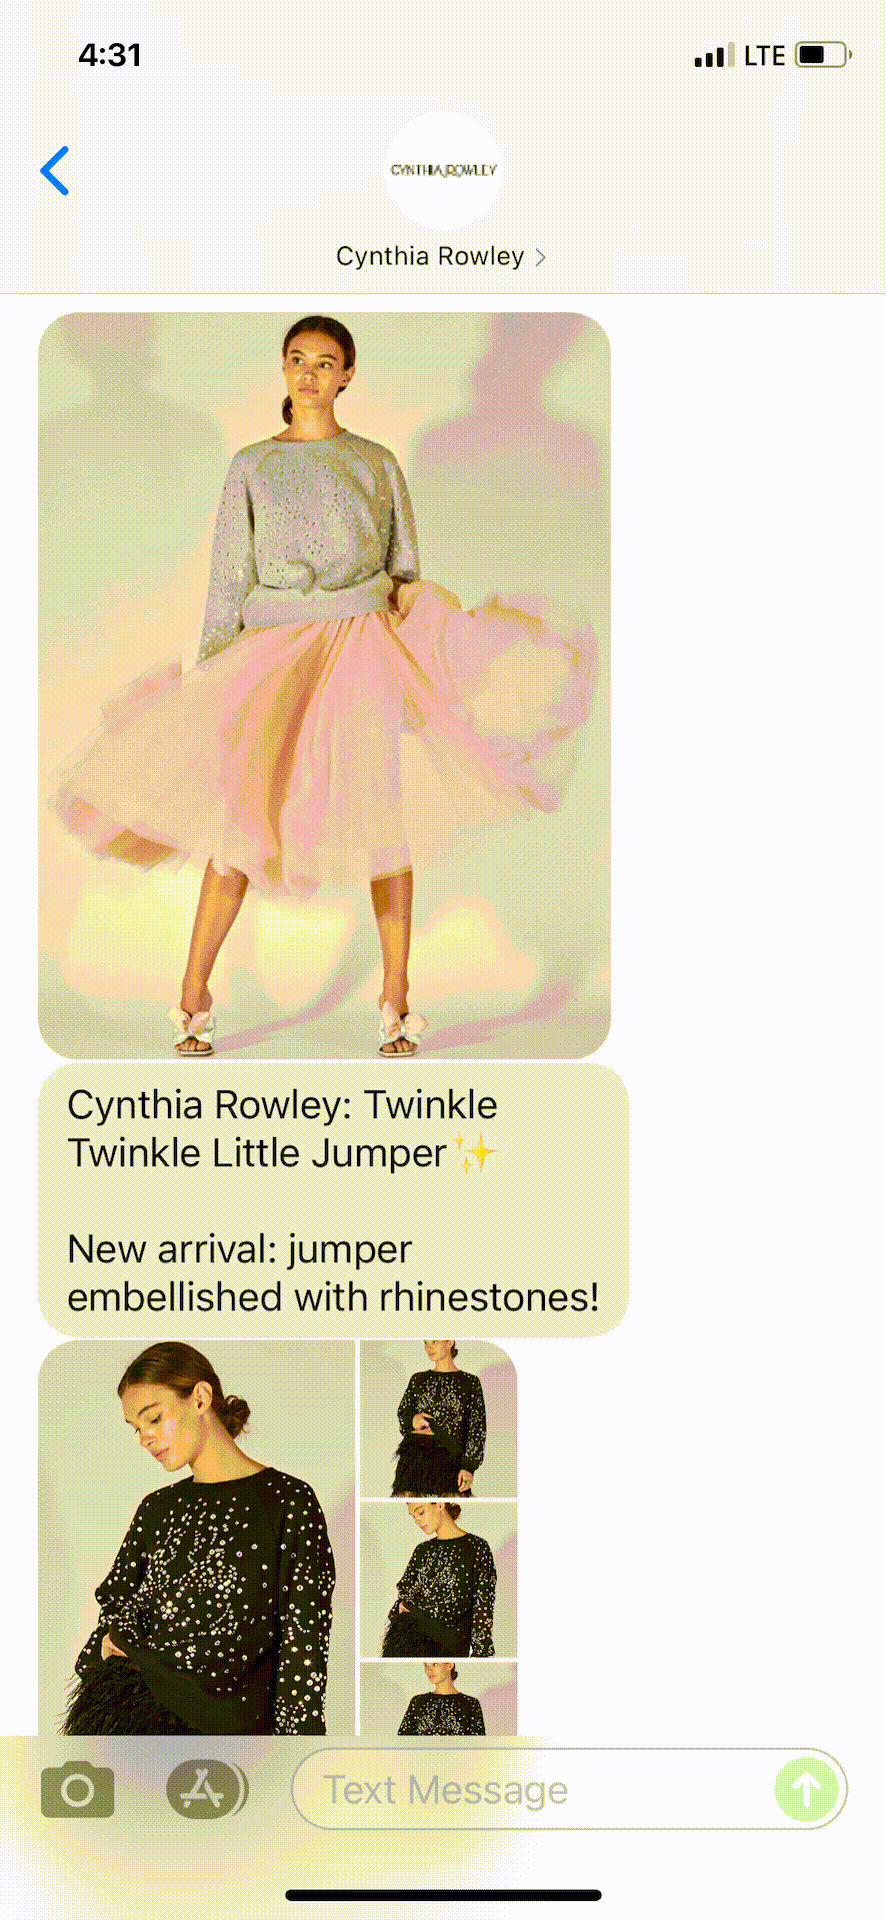 Cynthia-Rowley-Text-Message-Marketing-Example-10.19.2021